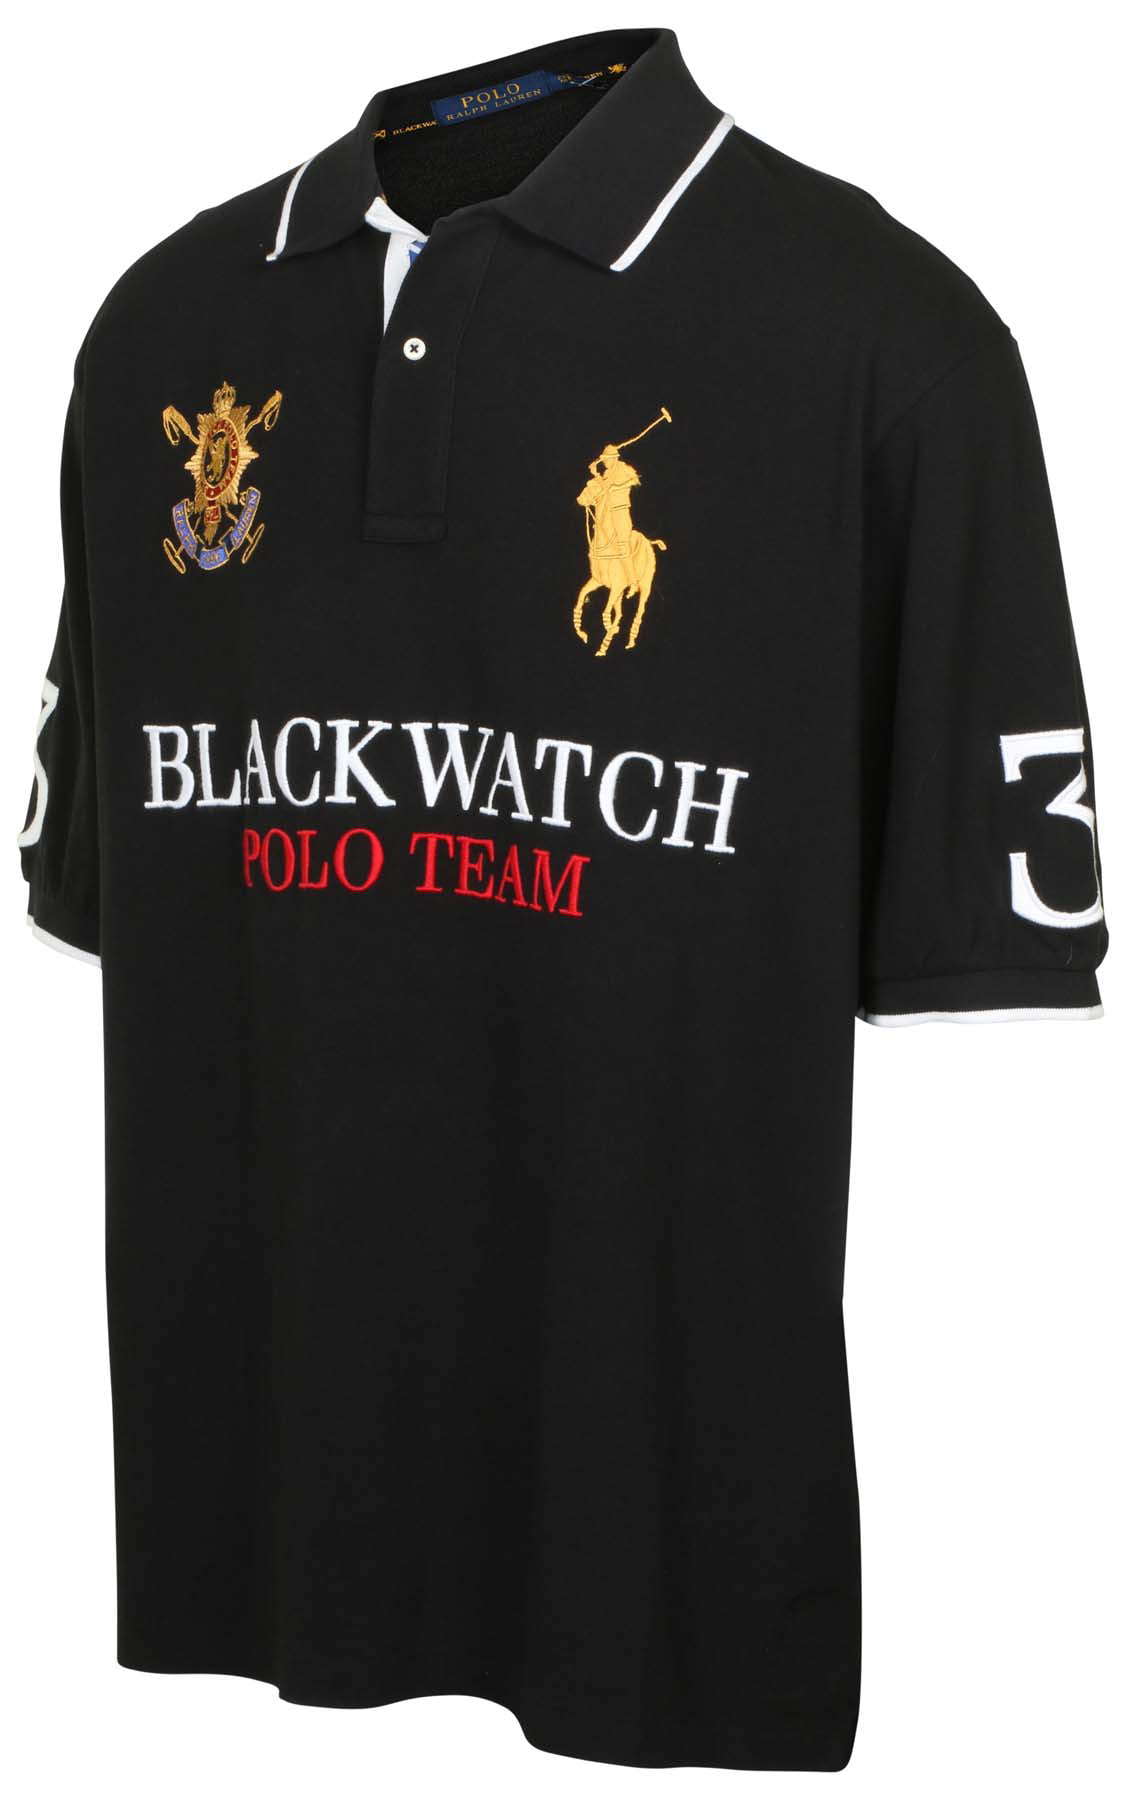 Polo RL Men's Big and Tall Black Watch Polo Team Shirt (3XB, Black) 